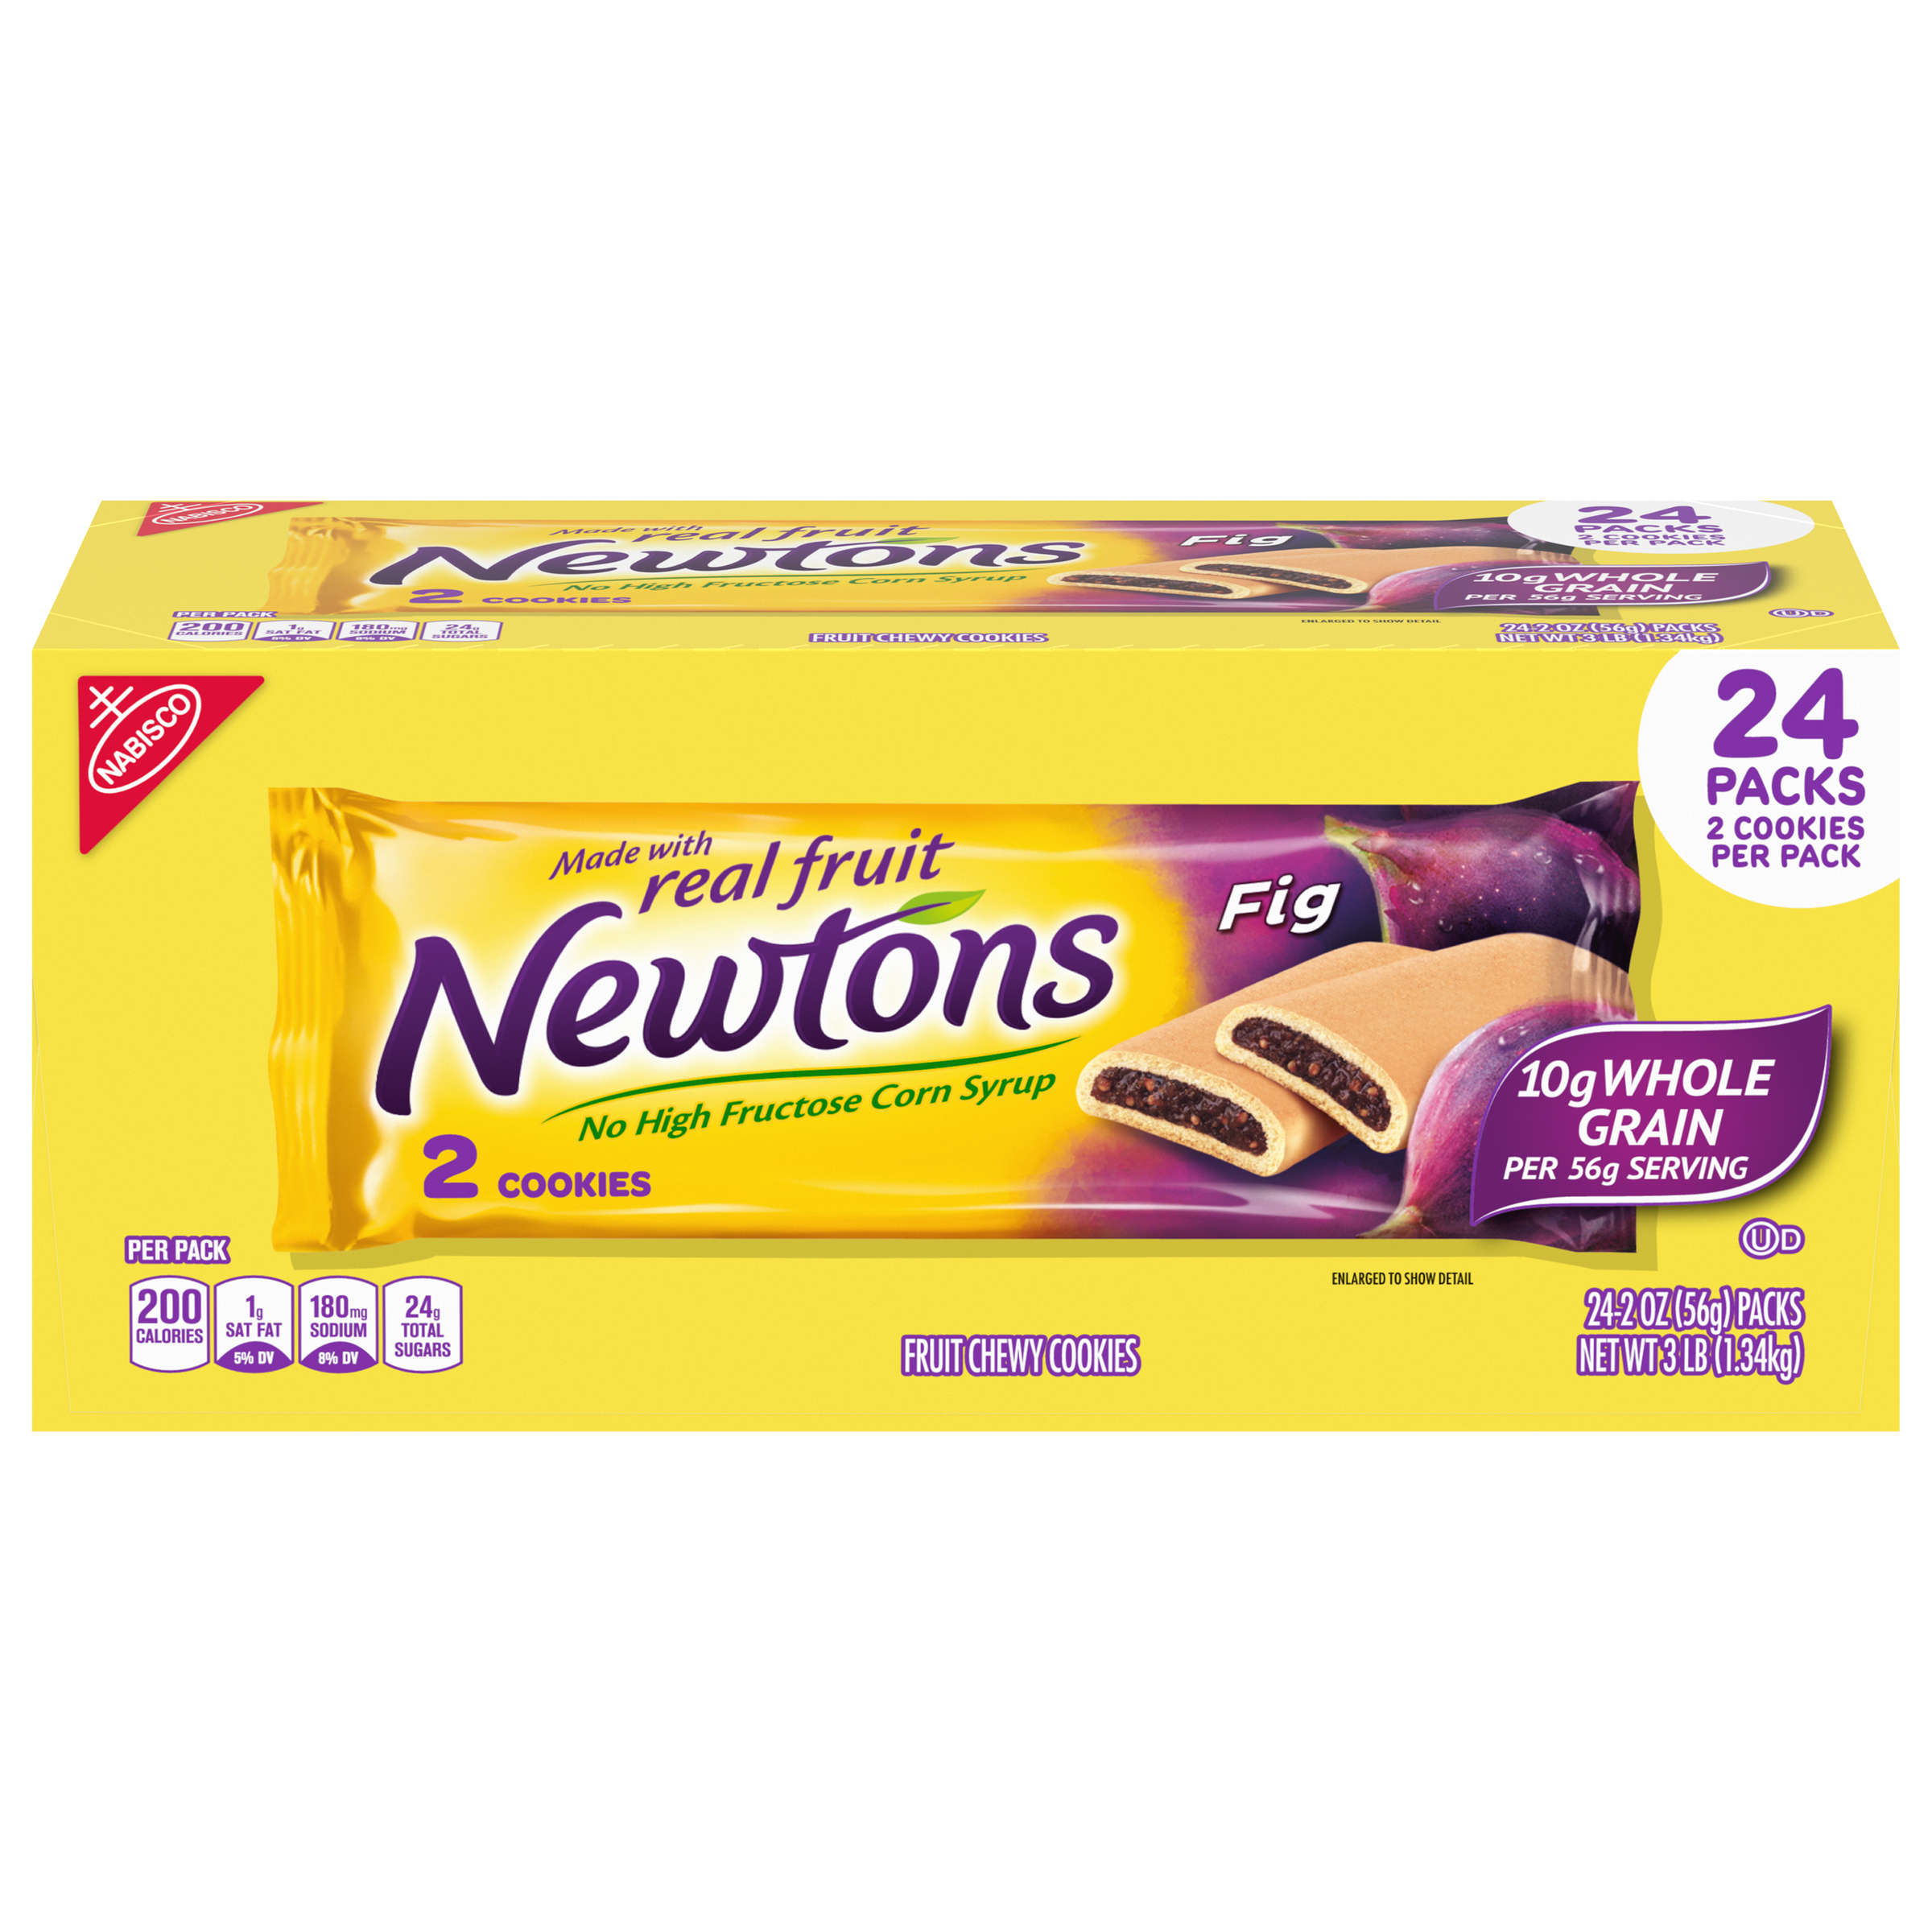 Newtons Soft & Fruit Chewy Fig Cookies, 24 Snack Packs (2 Cookies Per Pack)